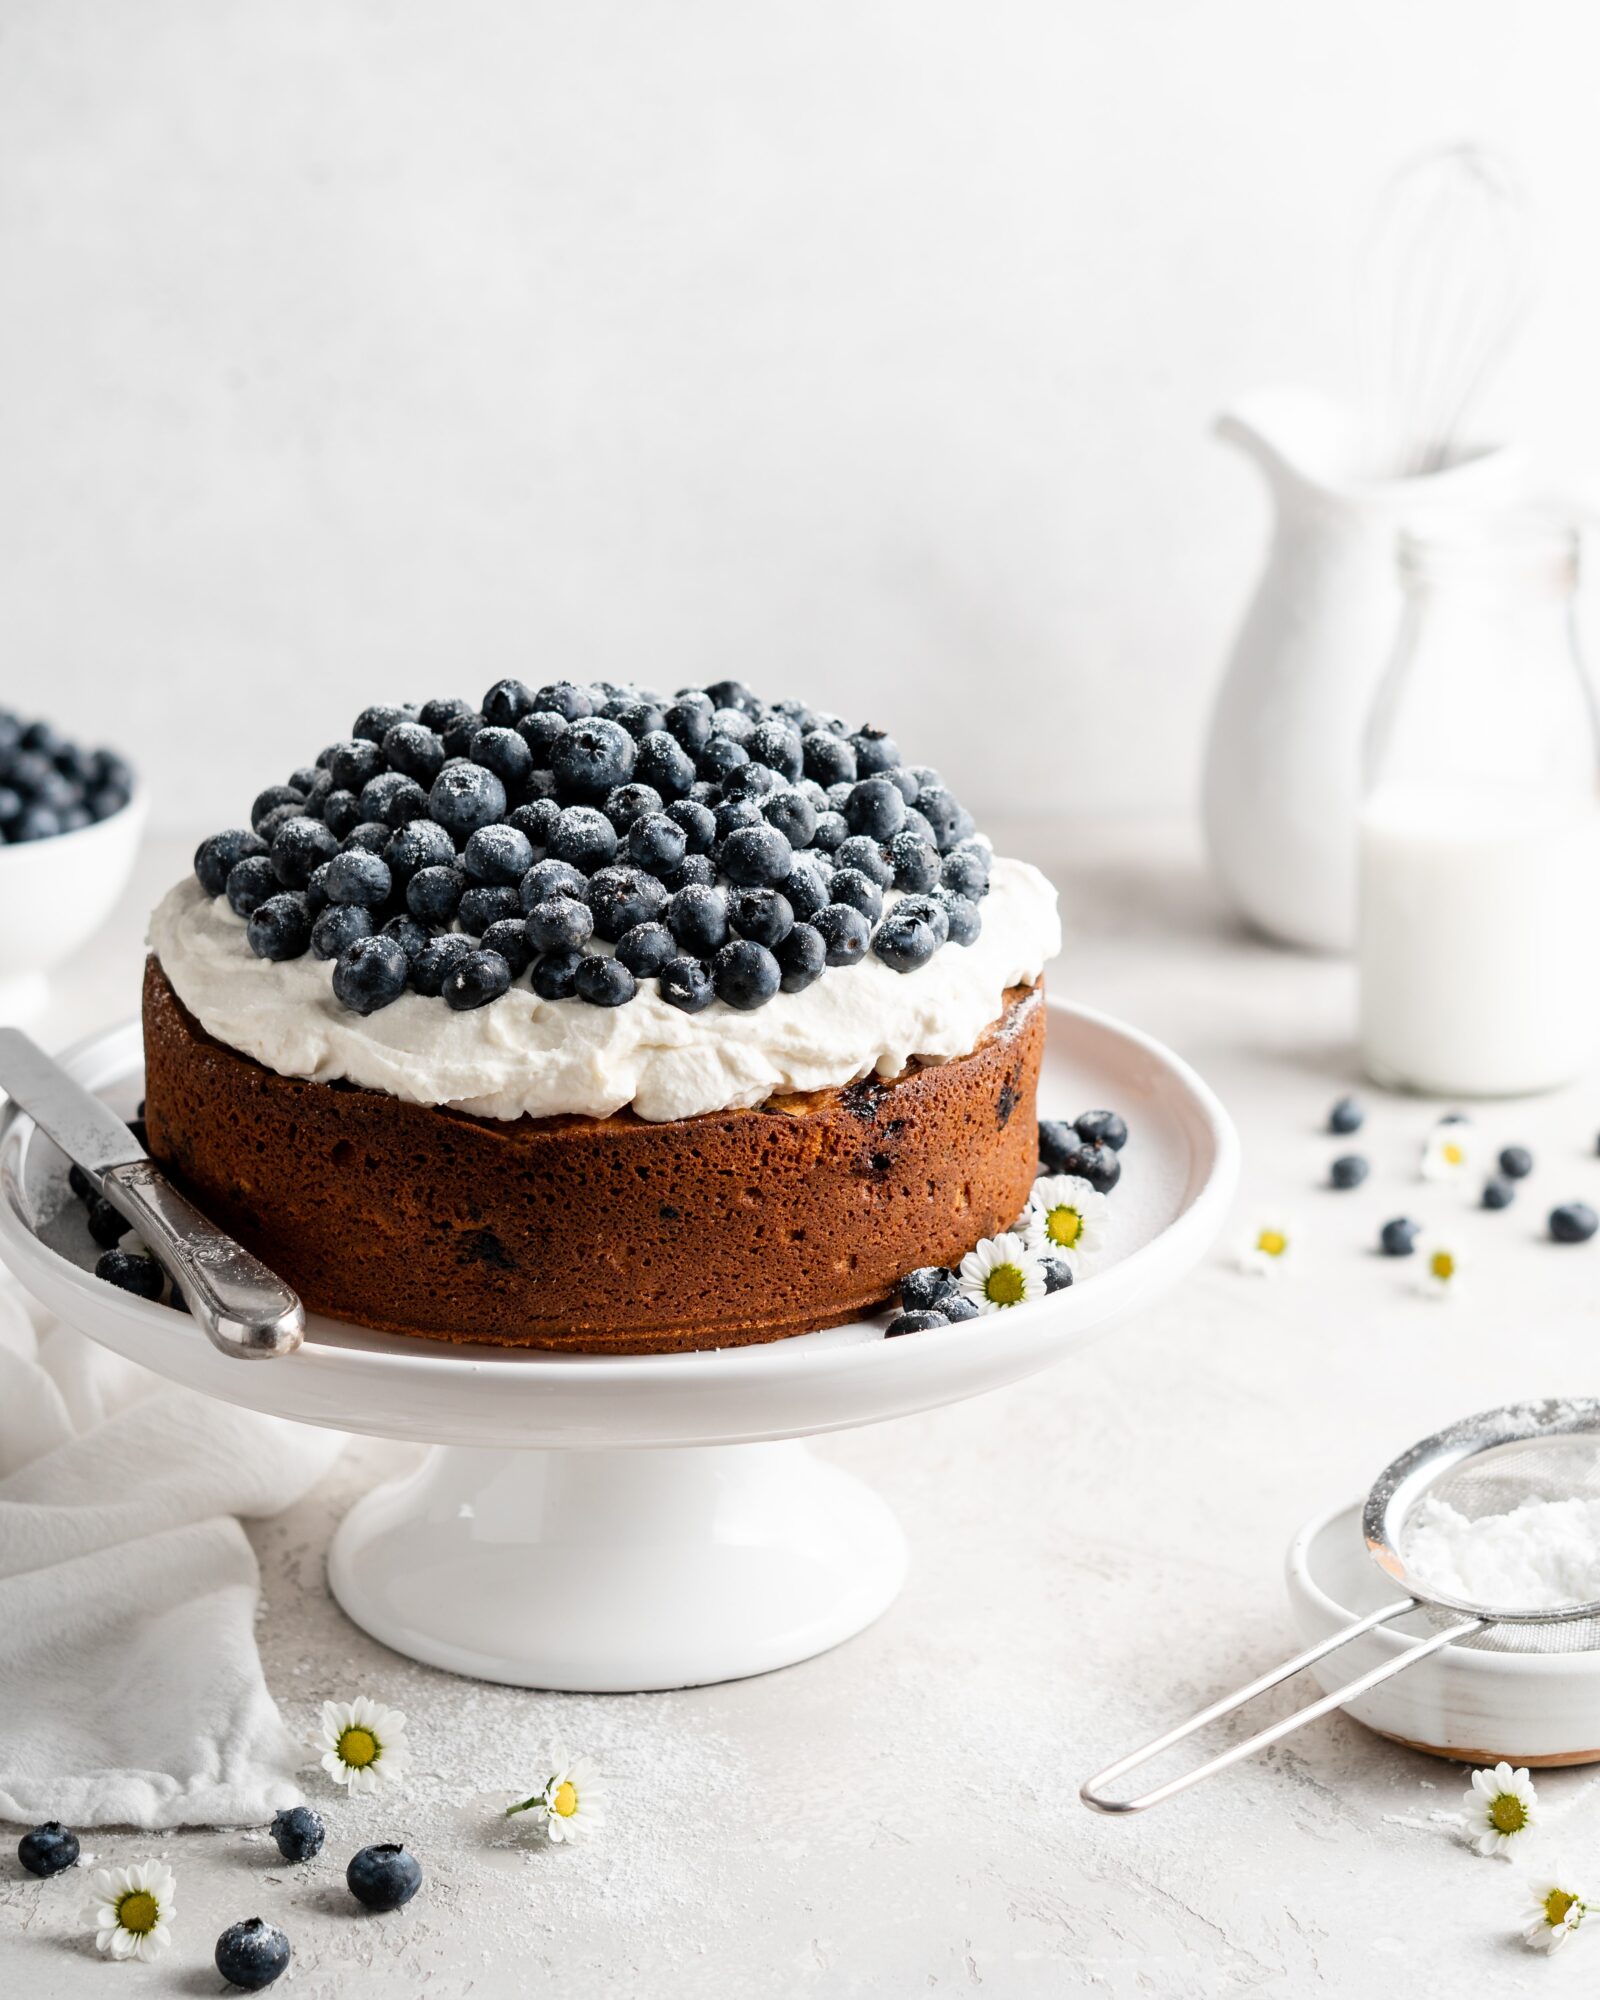 Best Blueberry Cake In Thane | Order Online